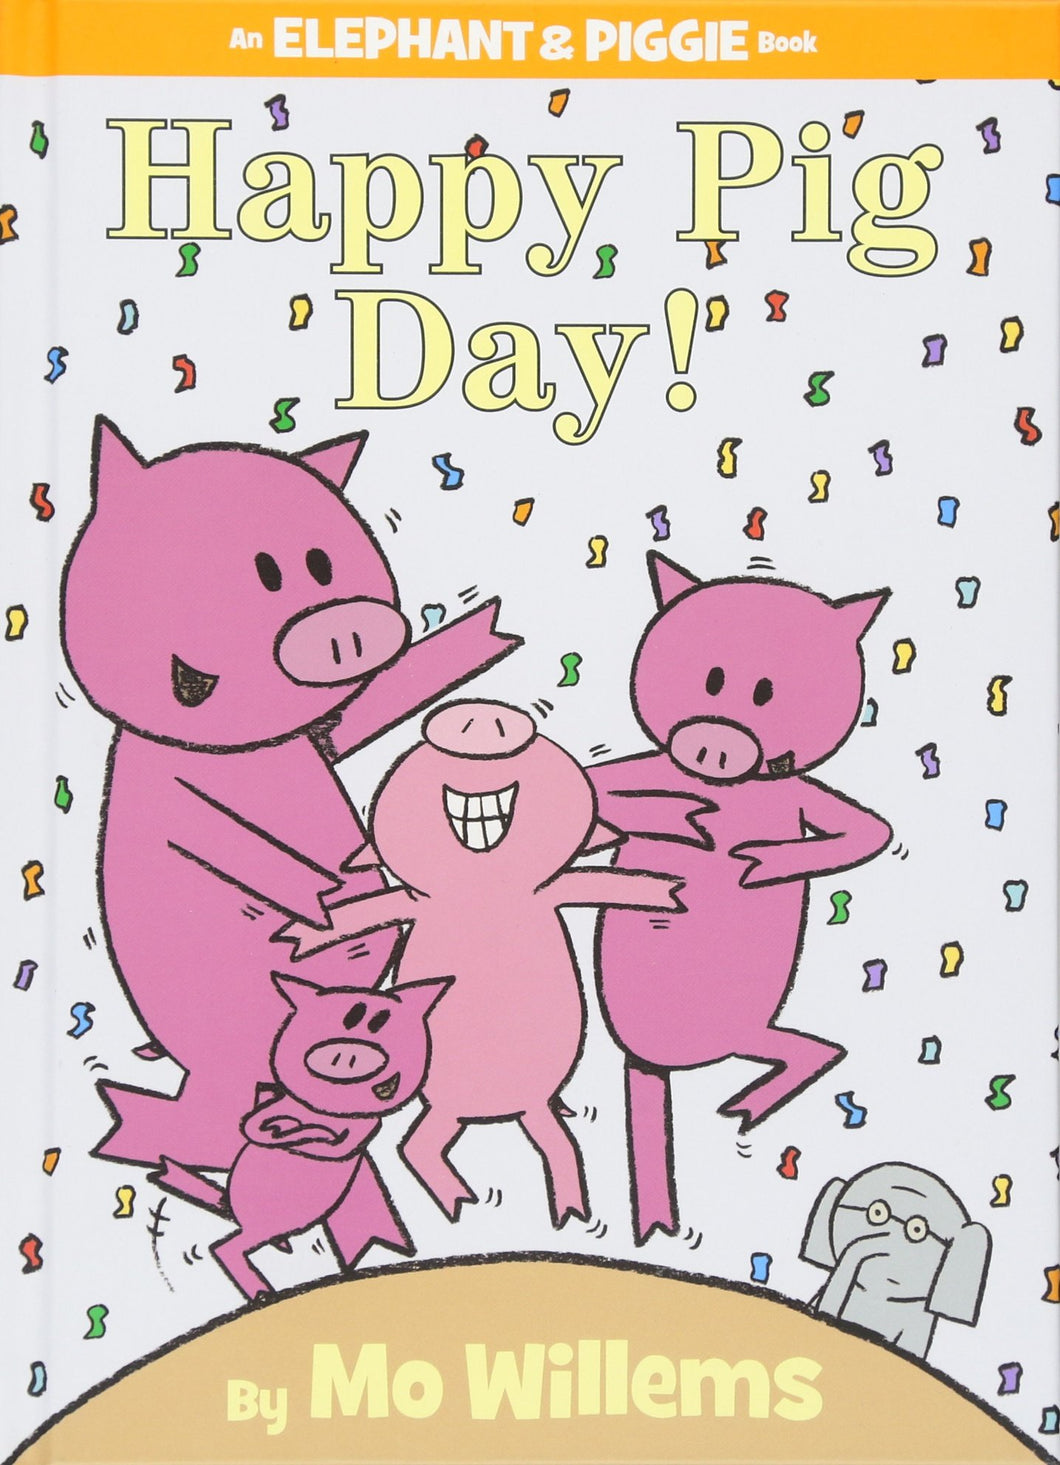 Happy Pig Day!: An Elephant & Piggie Book esikidz marketplace children books preschool books 